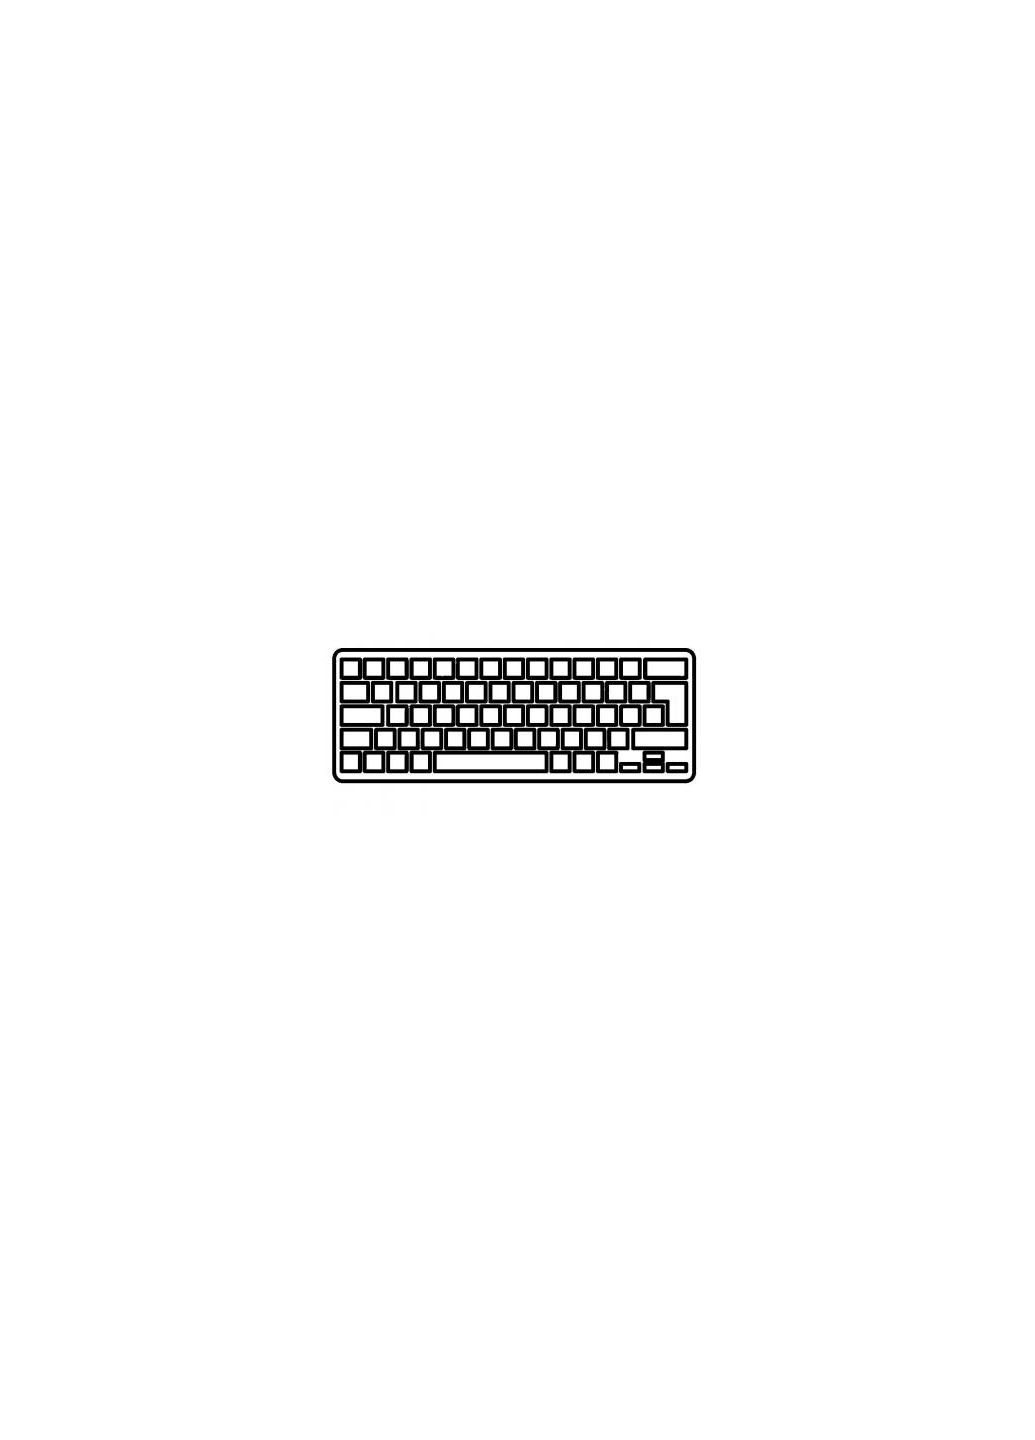 Клавиатура ноутбука (A43099) Asus a8/a8j/w3/w3j/w3000/f8/n80 серебро ua (276707840)